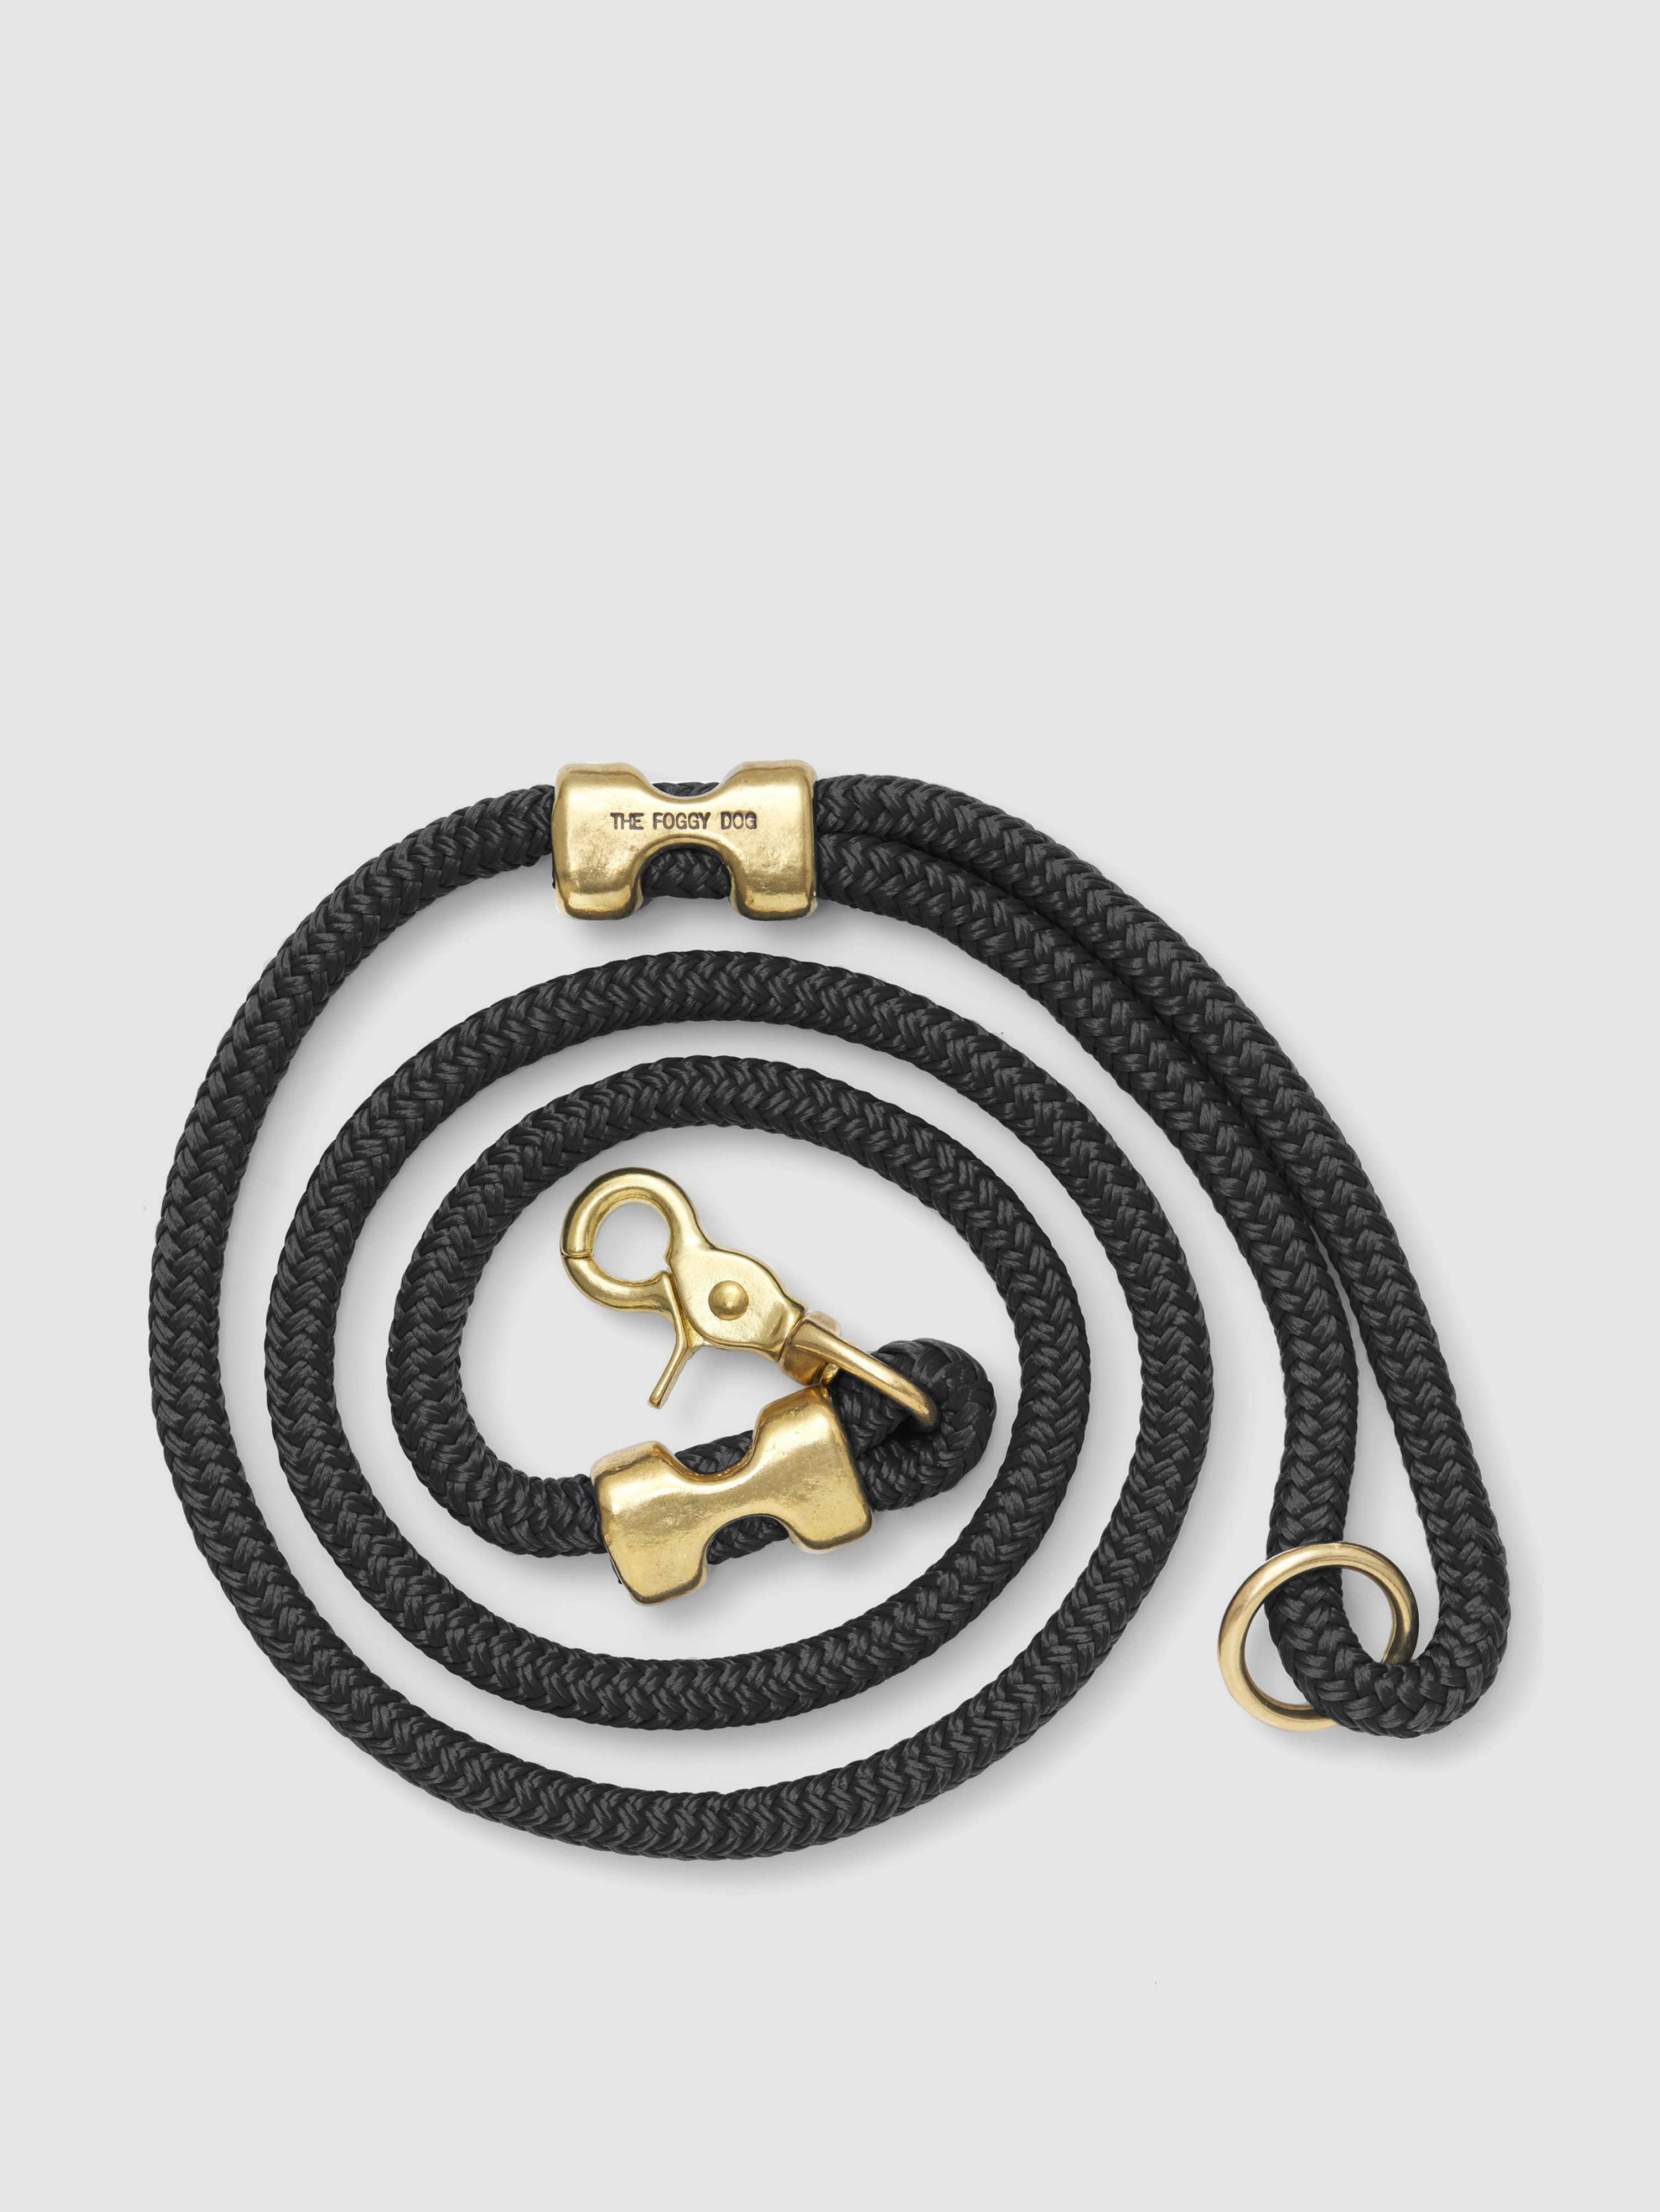 The Foggy Dog Onyx Marine Rope Dog Leash In Black